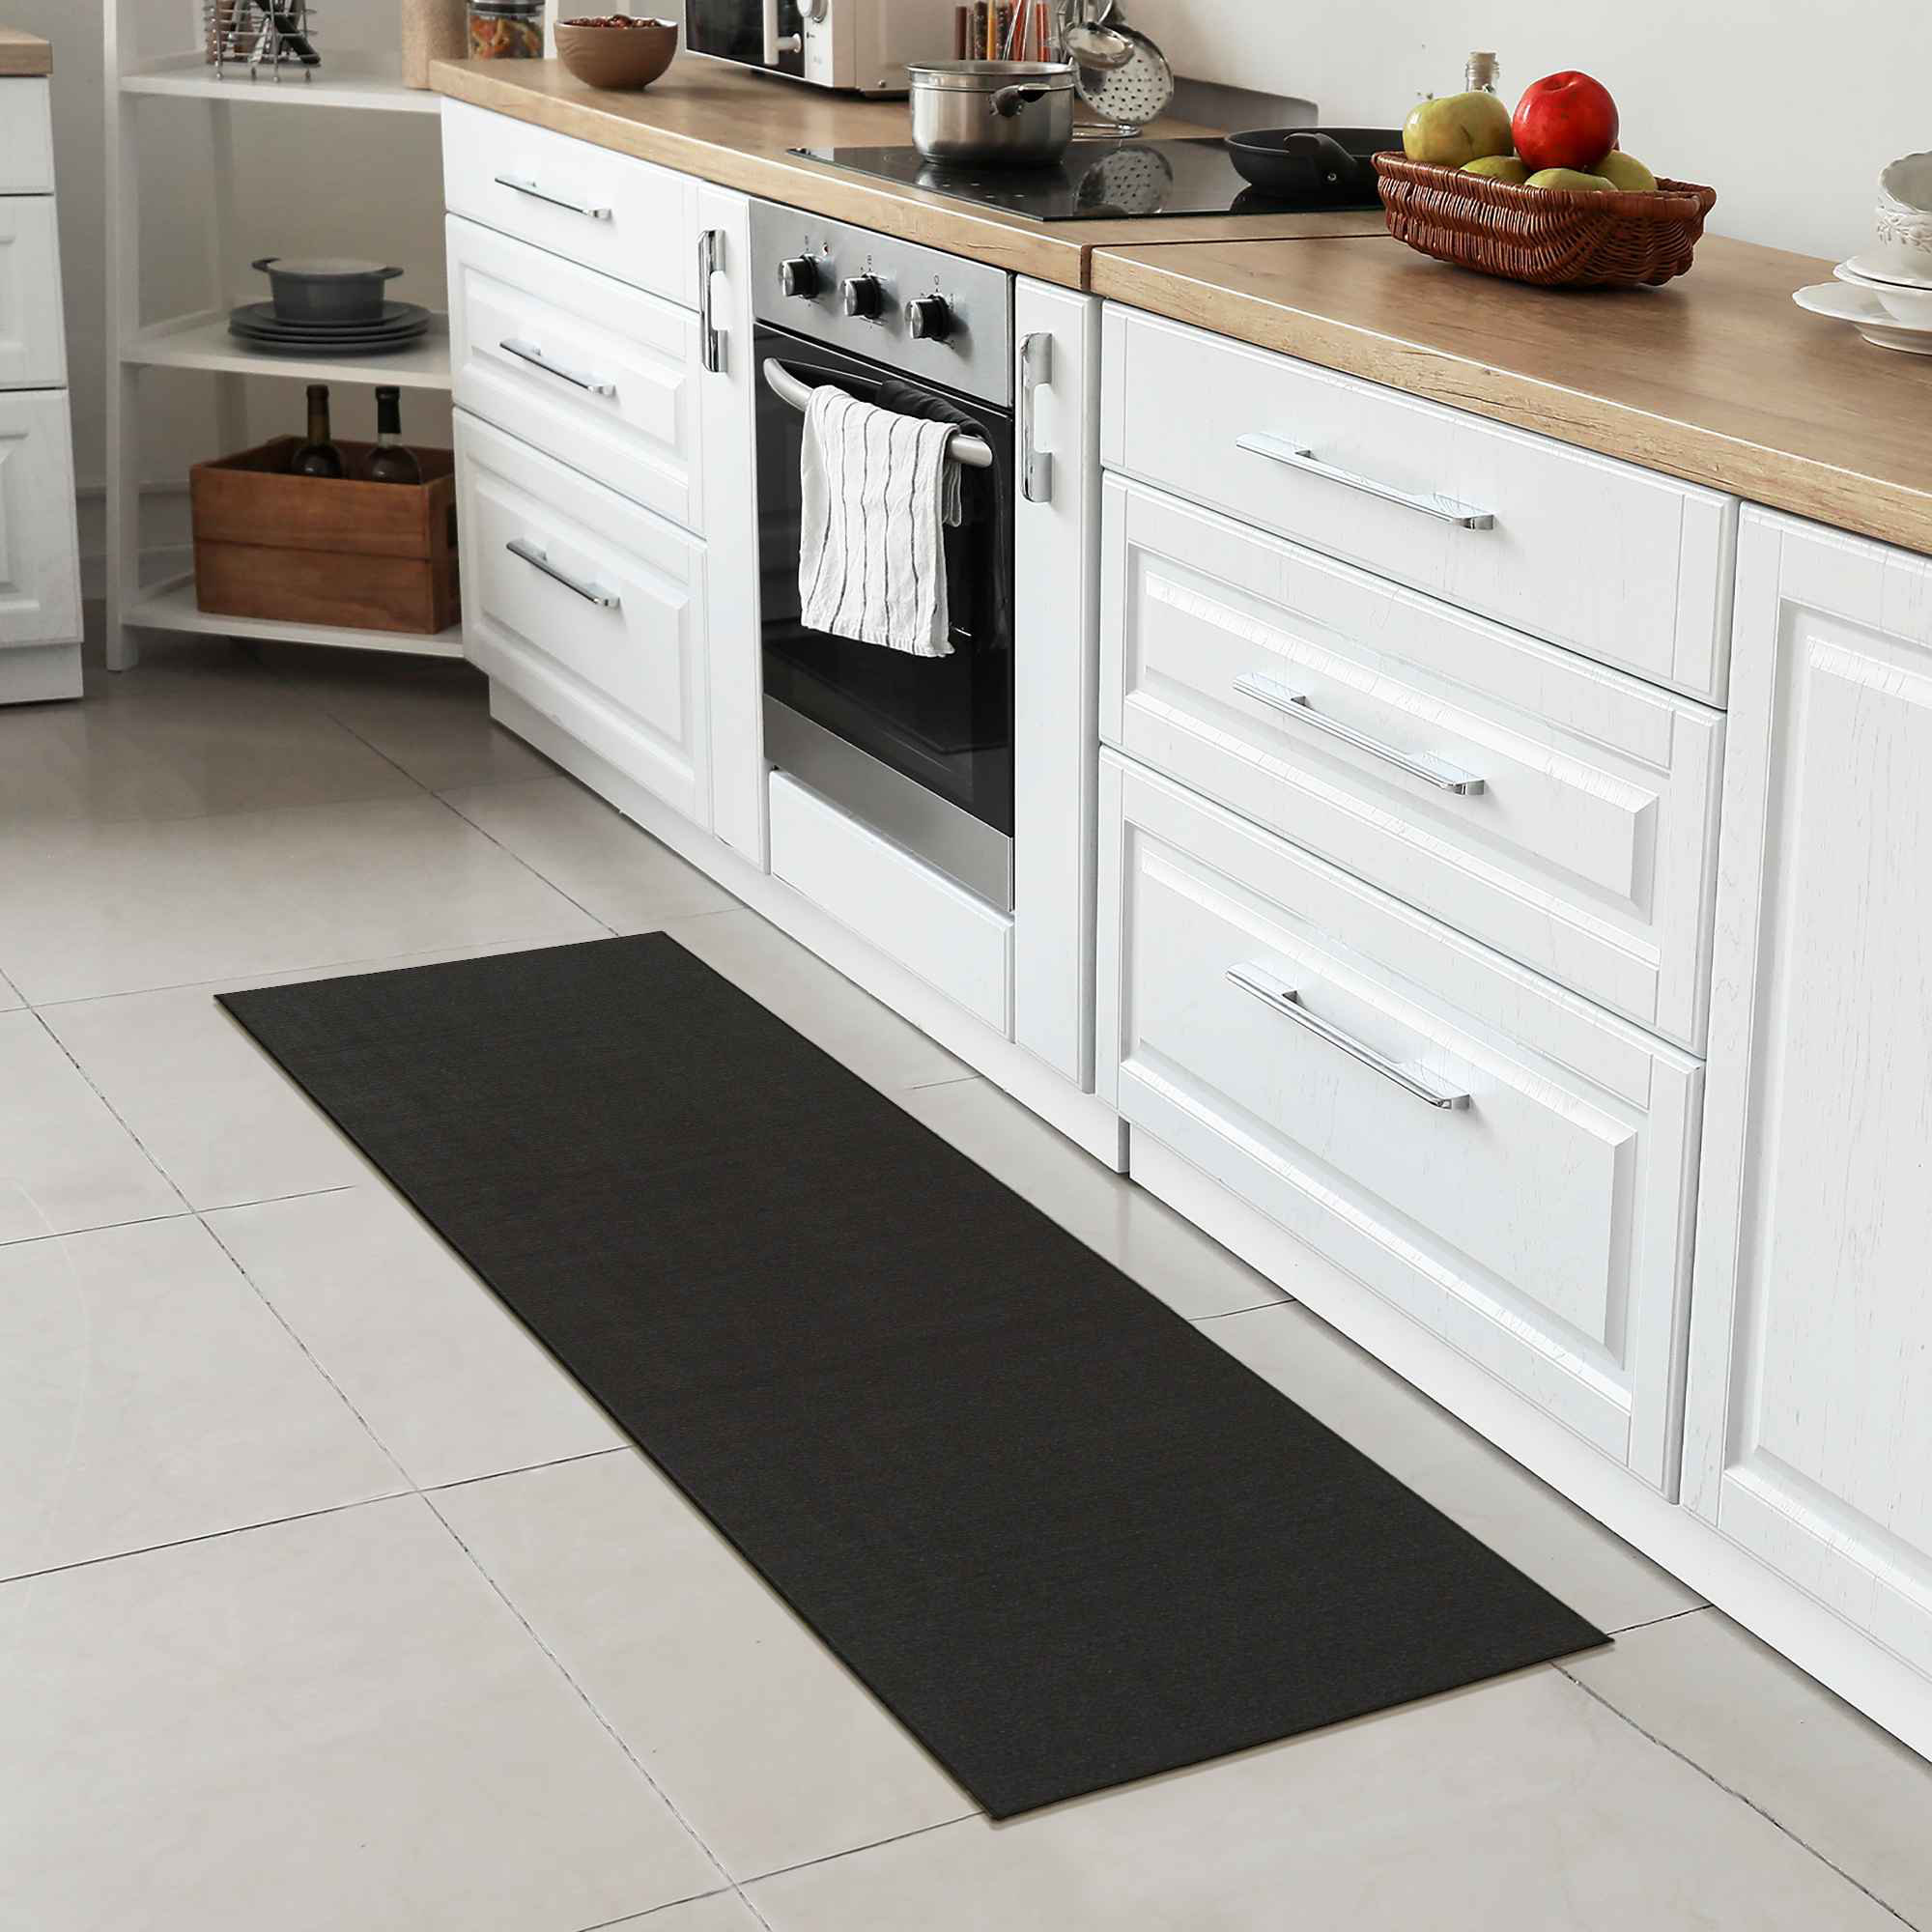 Gloria Non Slip Rubber Back Kitchen Rug Kitchen Runner Kitchen Mat Anti Slip Carpet (Checkered-Gray Runner (20 inchx59 inch)), Size: 20x59 (Runner)